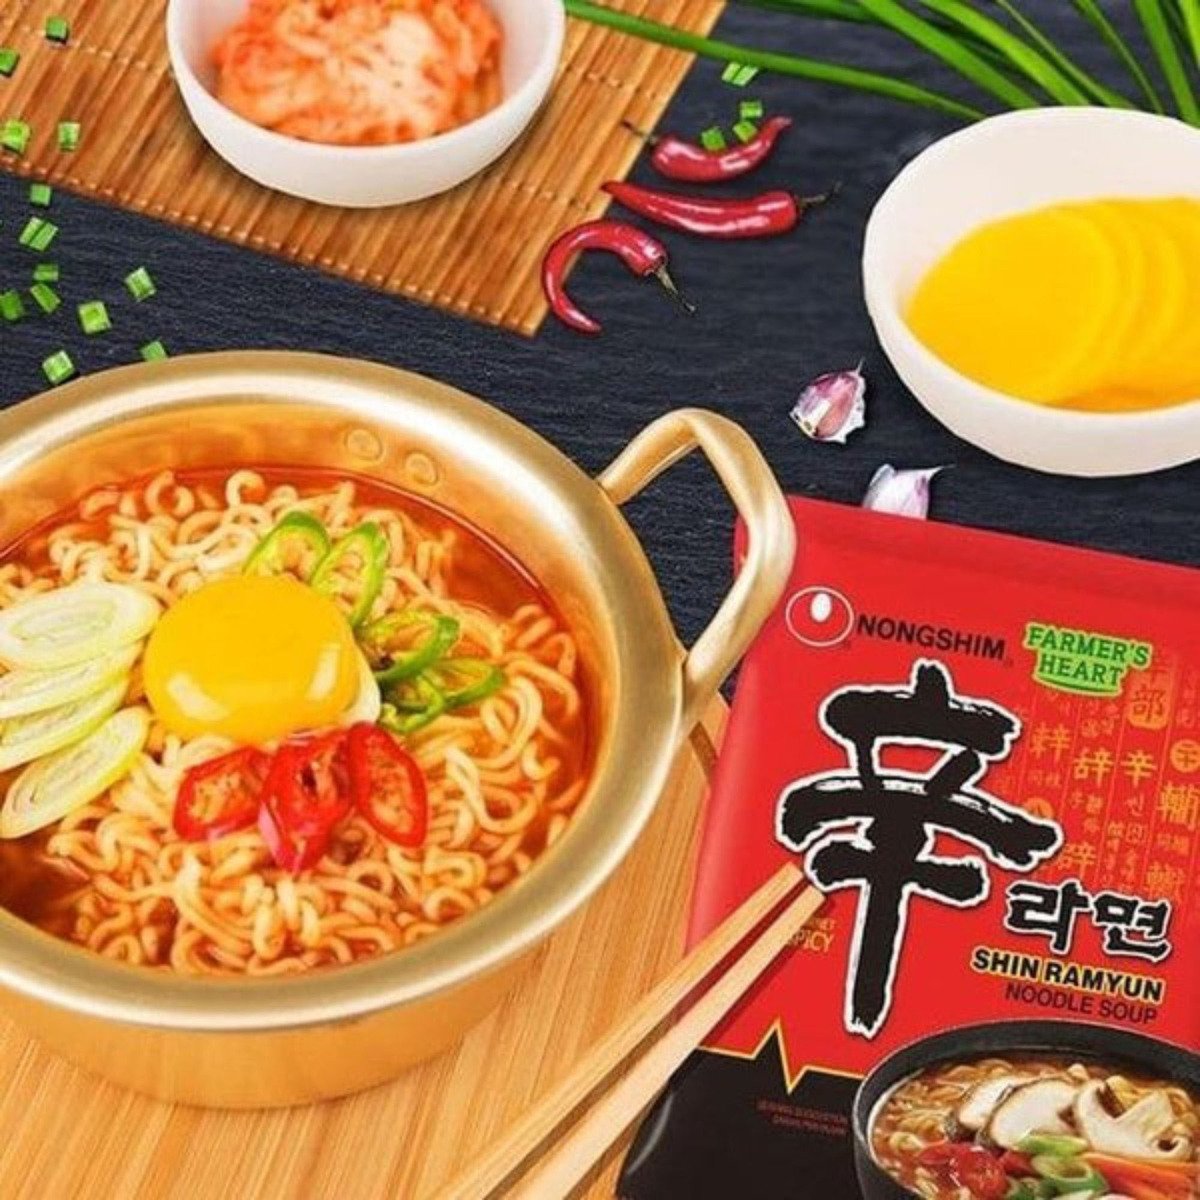 Nongshim Shin Ramyun Noodle Soup 120 g